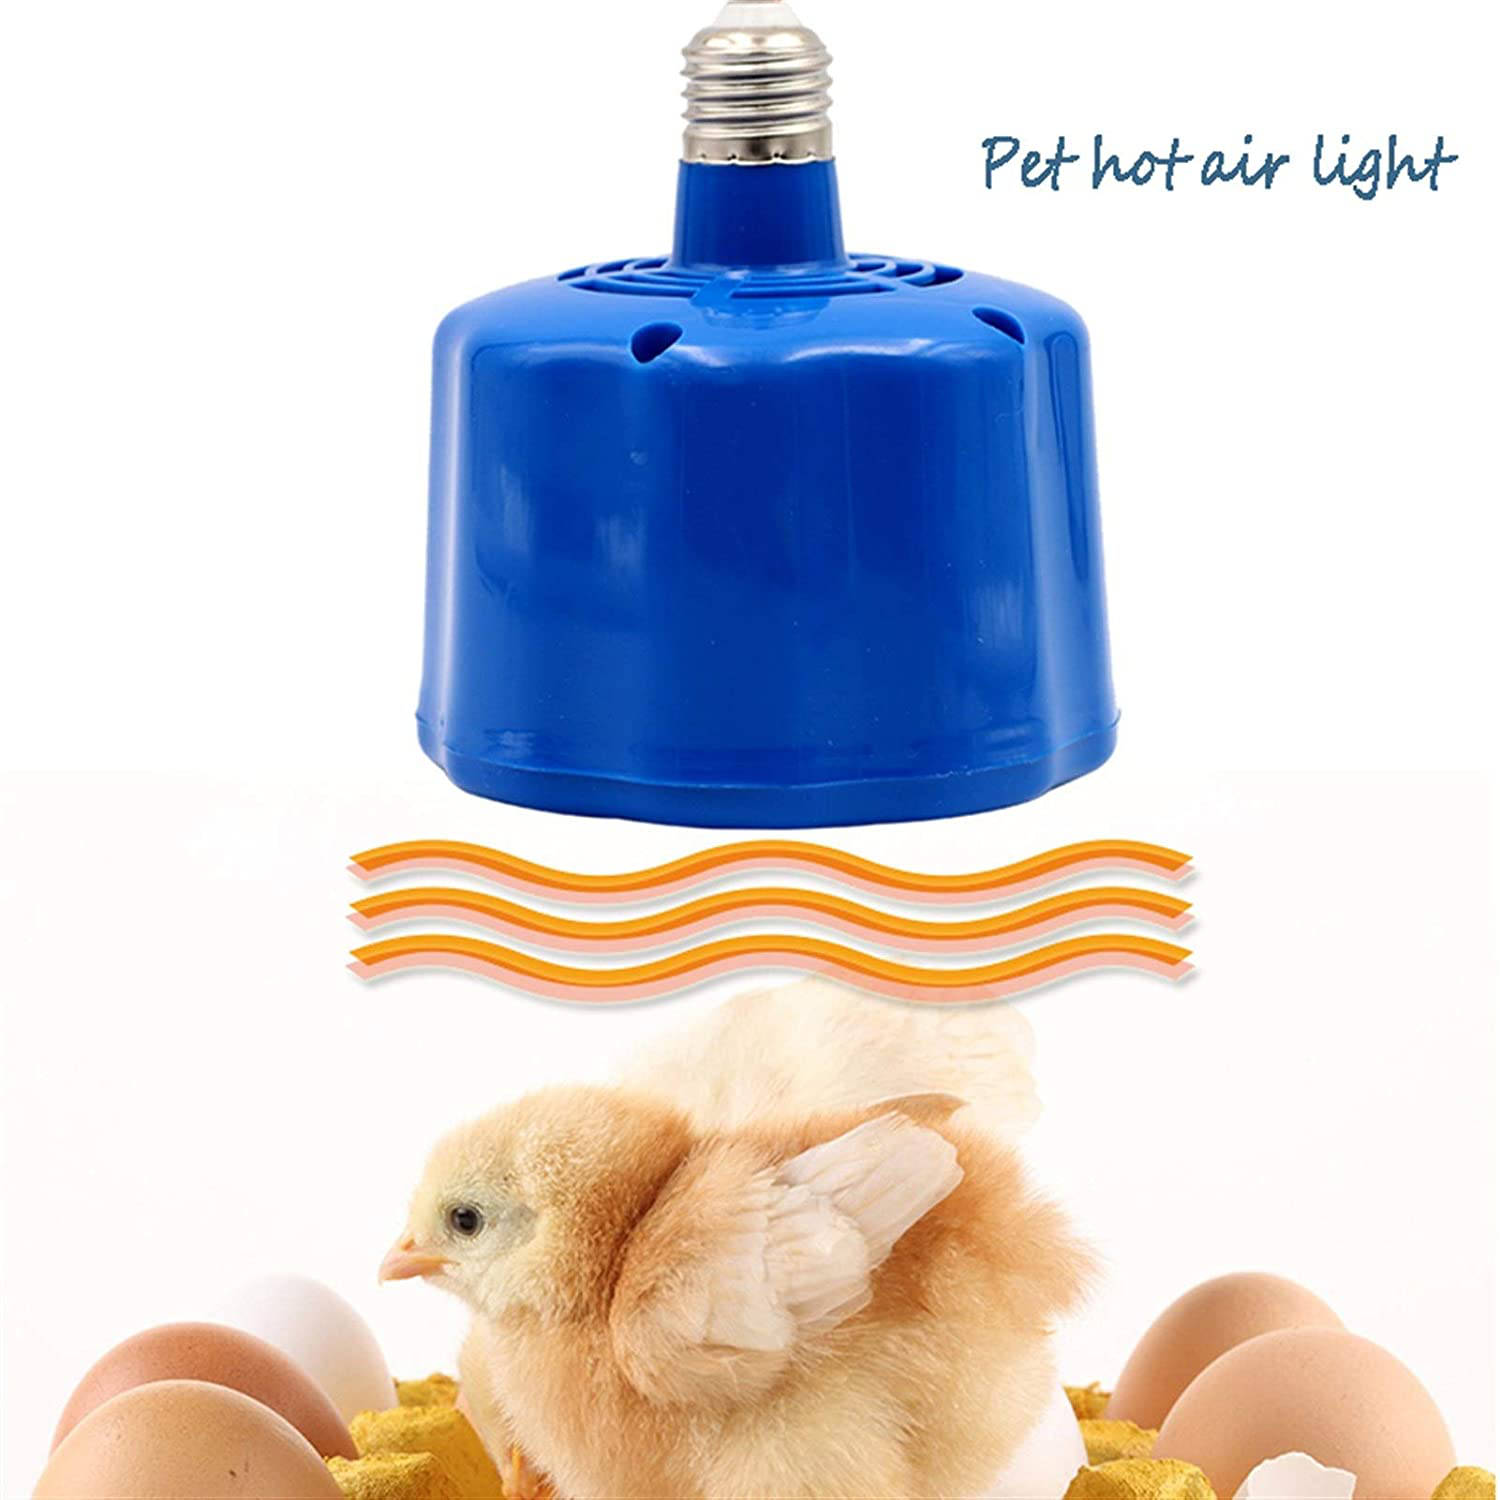 HXY2020 Pet Heating Pad Chicken Heating Lamp Animal Warm Light Heater Cultivation Heating Lamp for Pet Chicken Livestock Heat Lamp Lighting 100W 300W Reptile & Amphibian Habitat